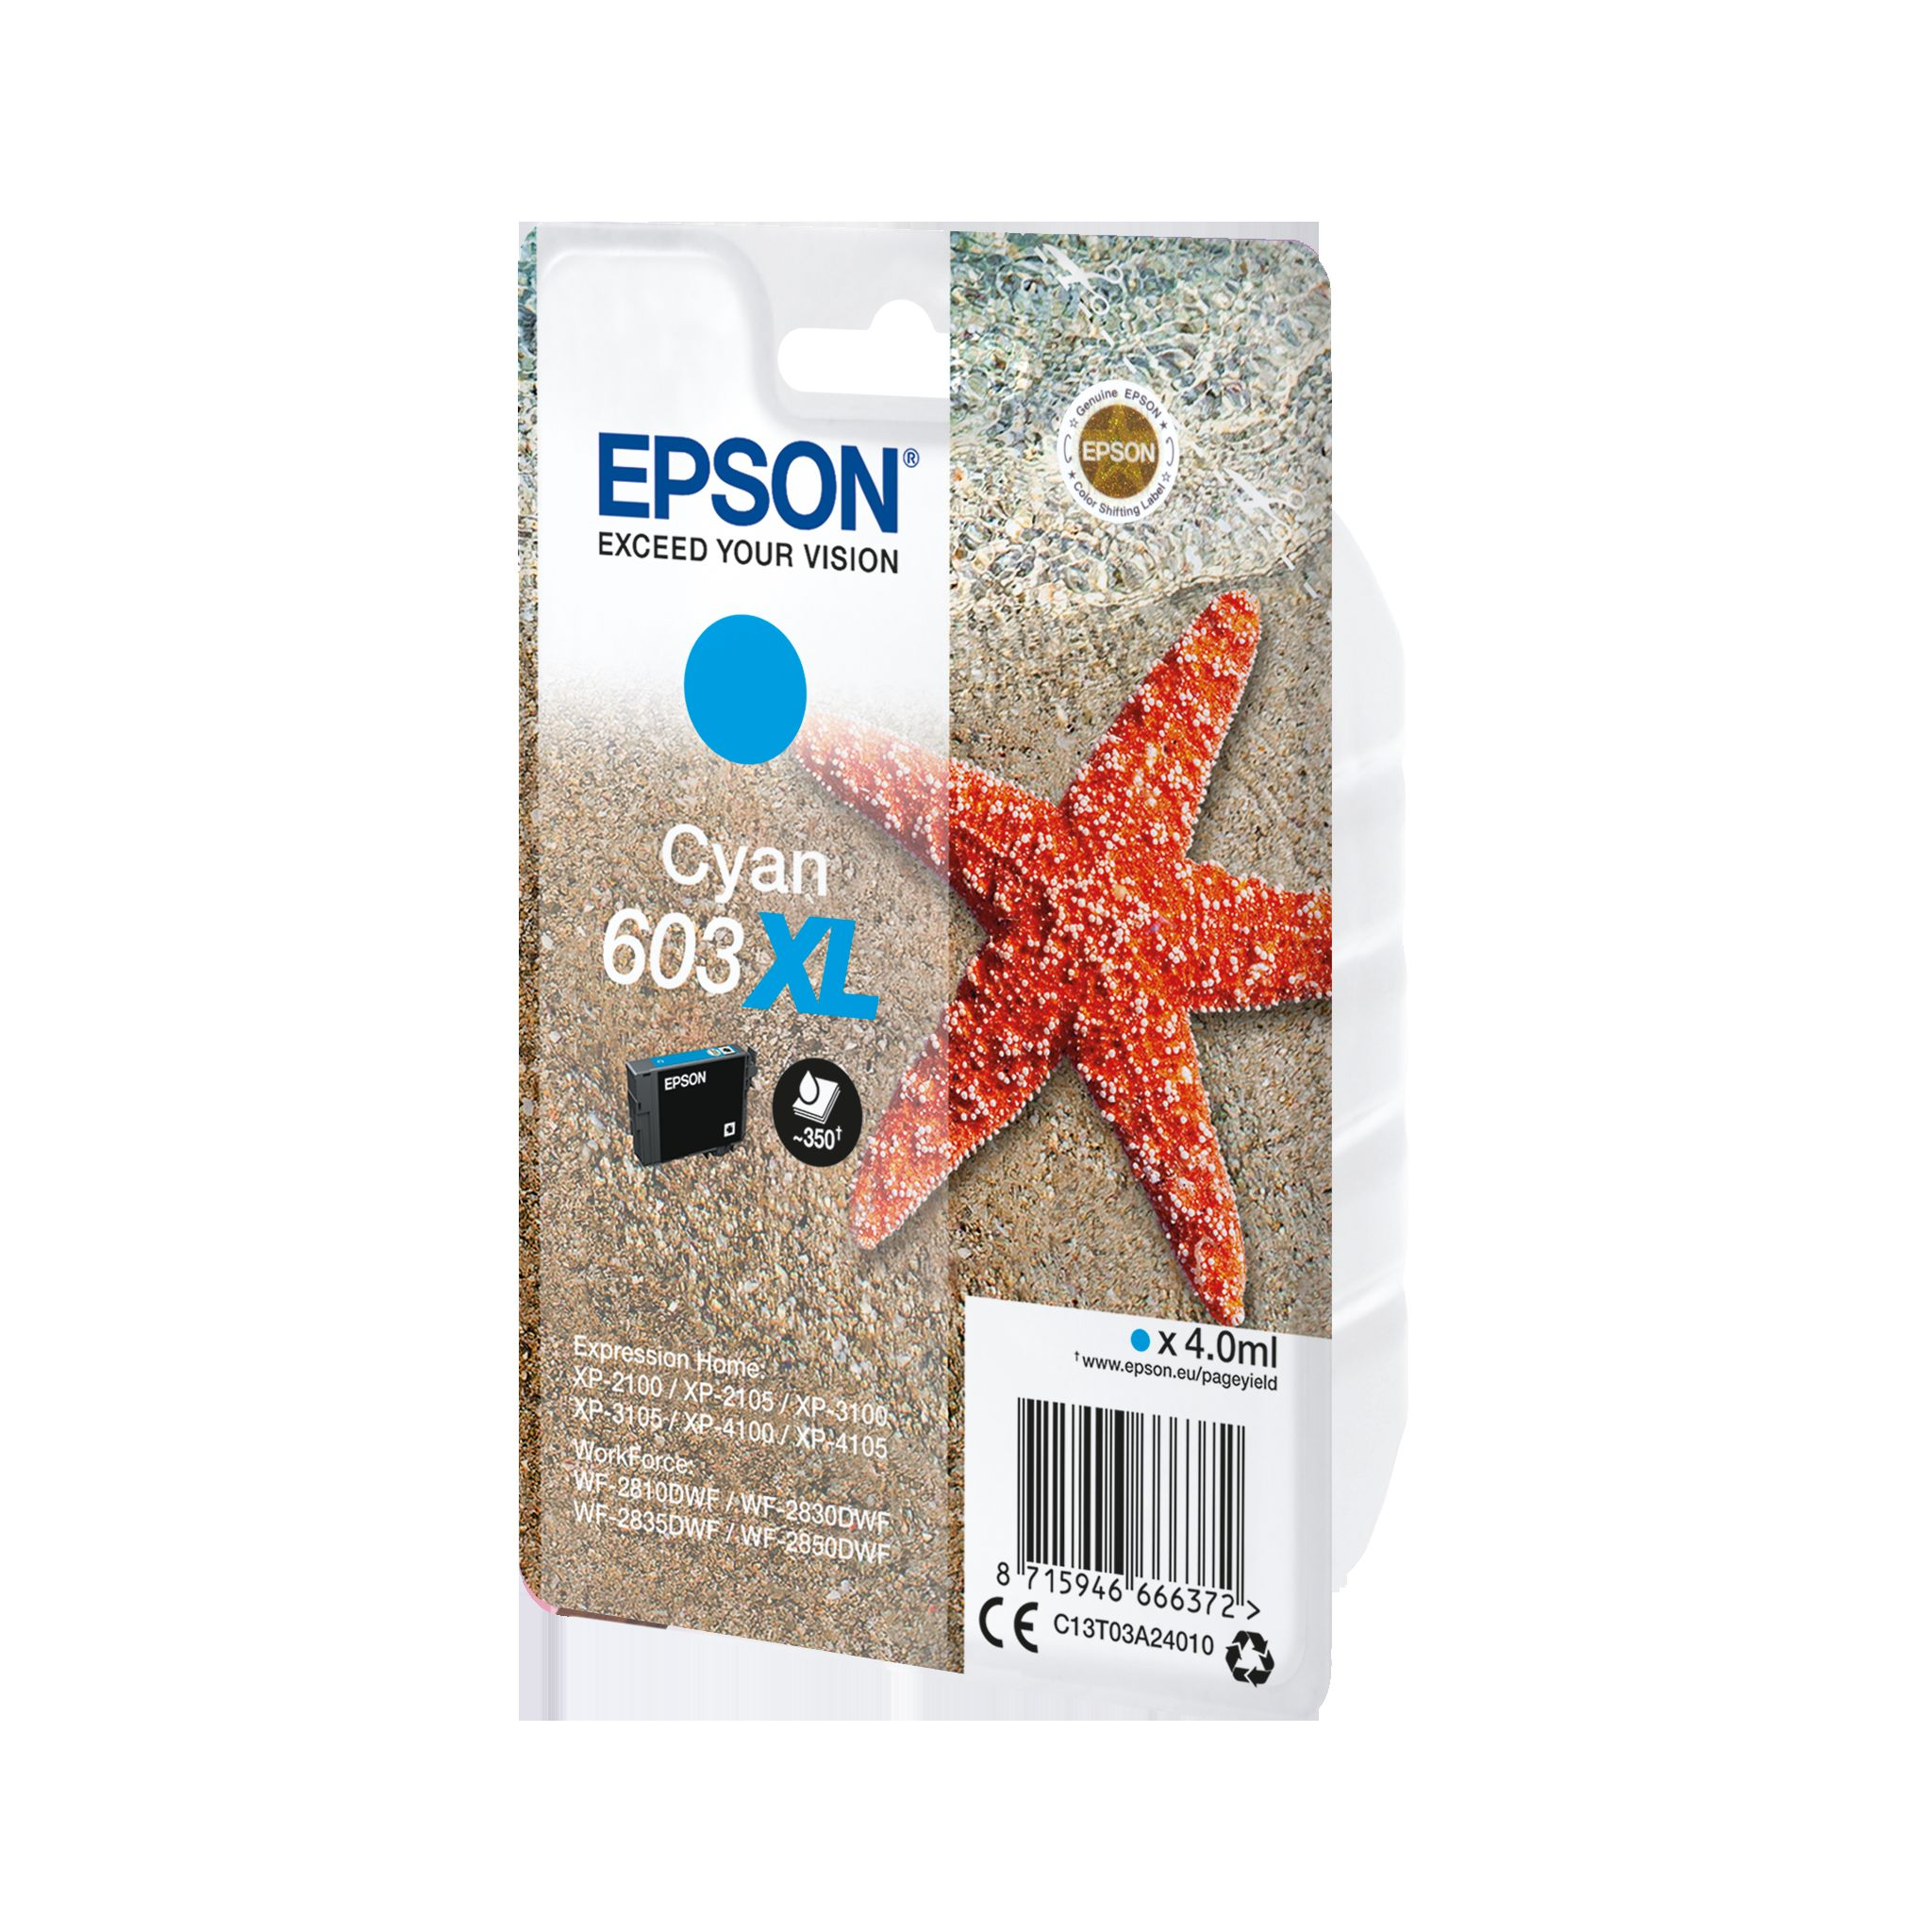 EPSON 603XL Tinte (C13T03A240) cyan